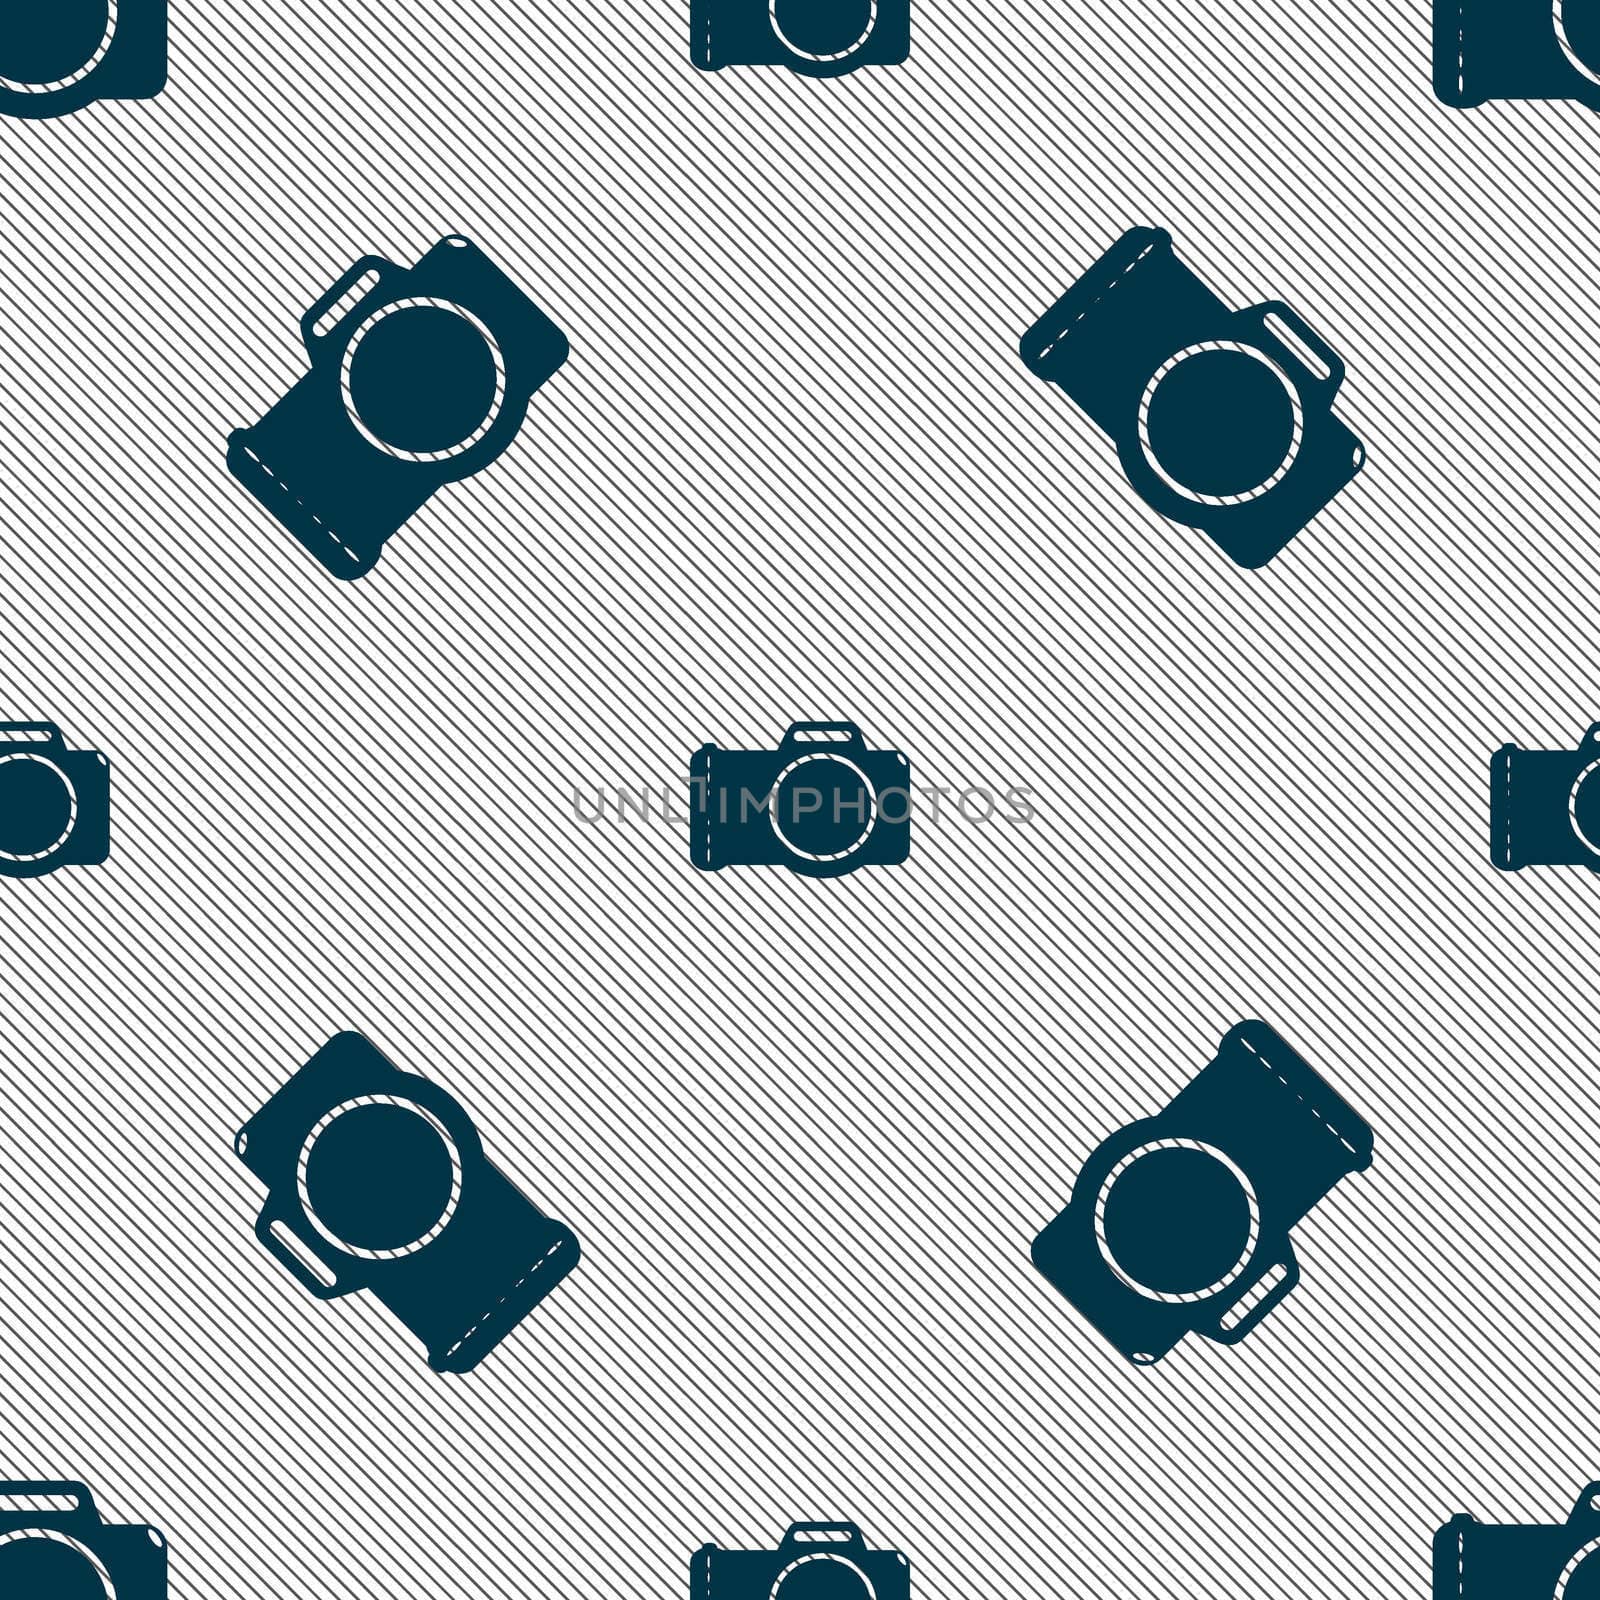 Photo camera sign icon. Digital photo camera symbol. Seamless pattern with geometric texture. illustration